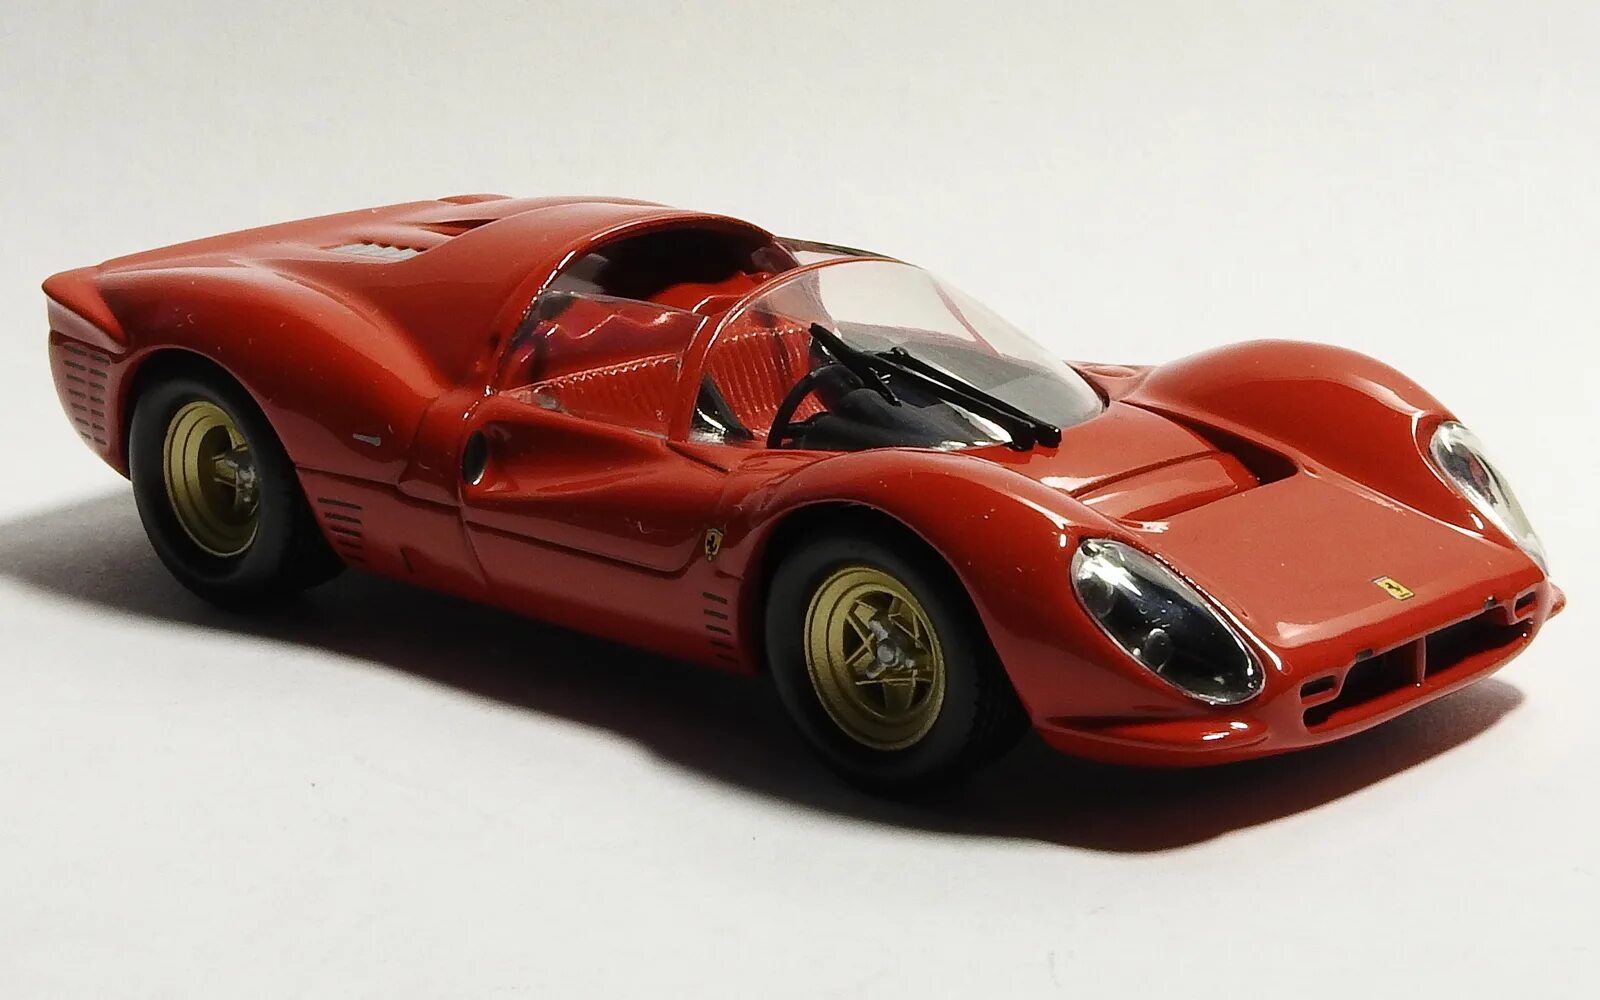 Ferrari 330 p4 16 Ferrari collection. Ferrari 330 p4 модель 1 43. Ferrari 330 p4 1/43 1967. Ferrari collection 1 43. Ferrari collection